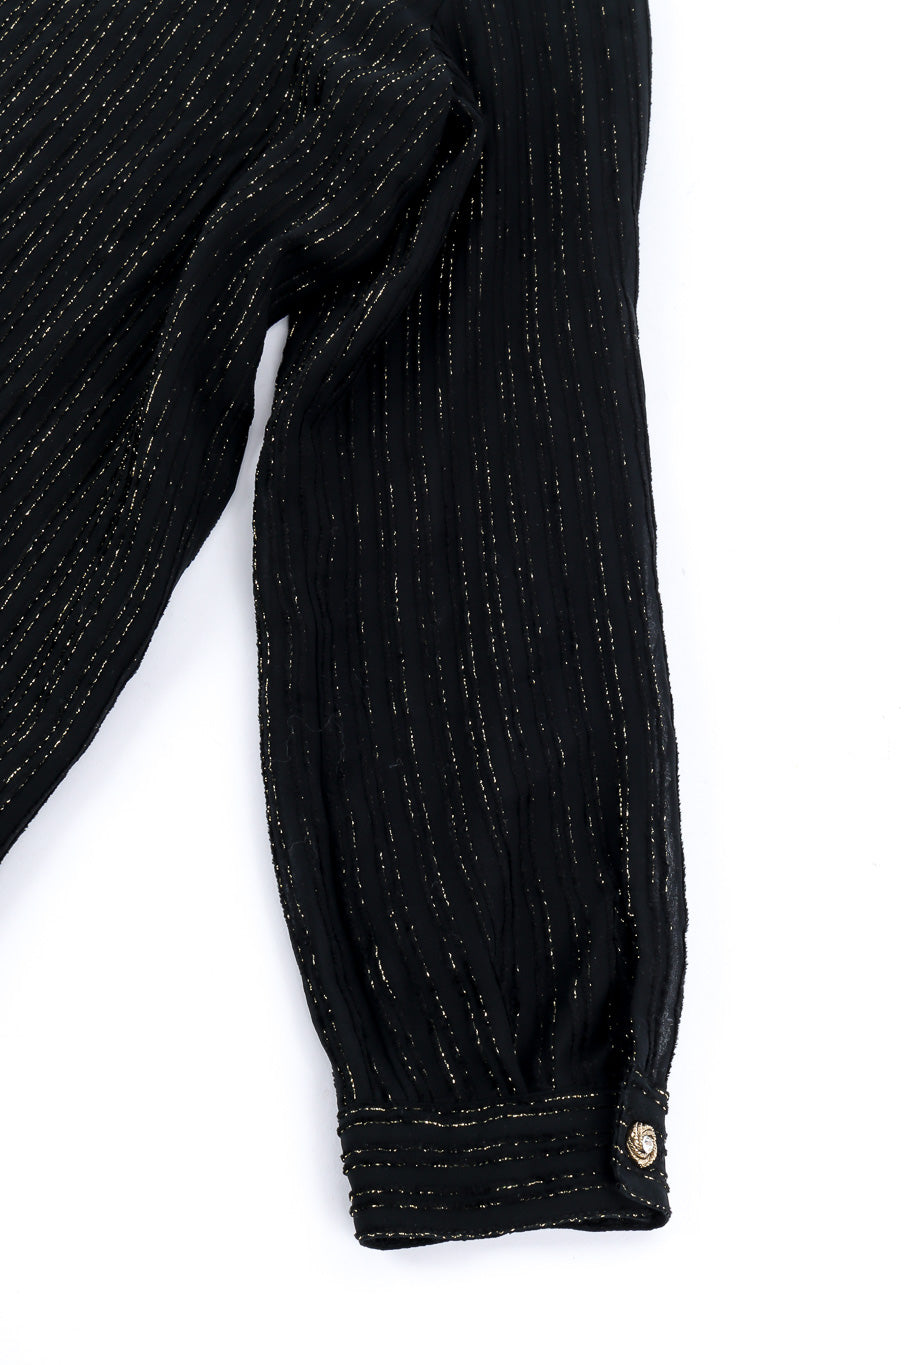 Valentino sheer lamé stripe blouse sleeve detail @recessla